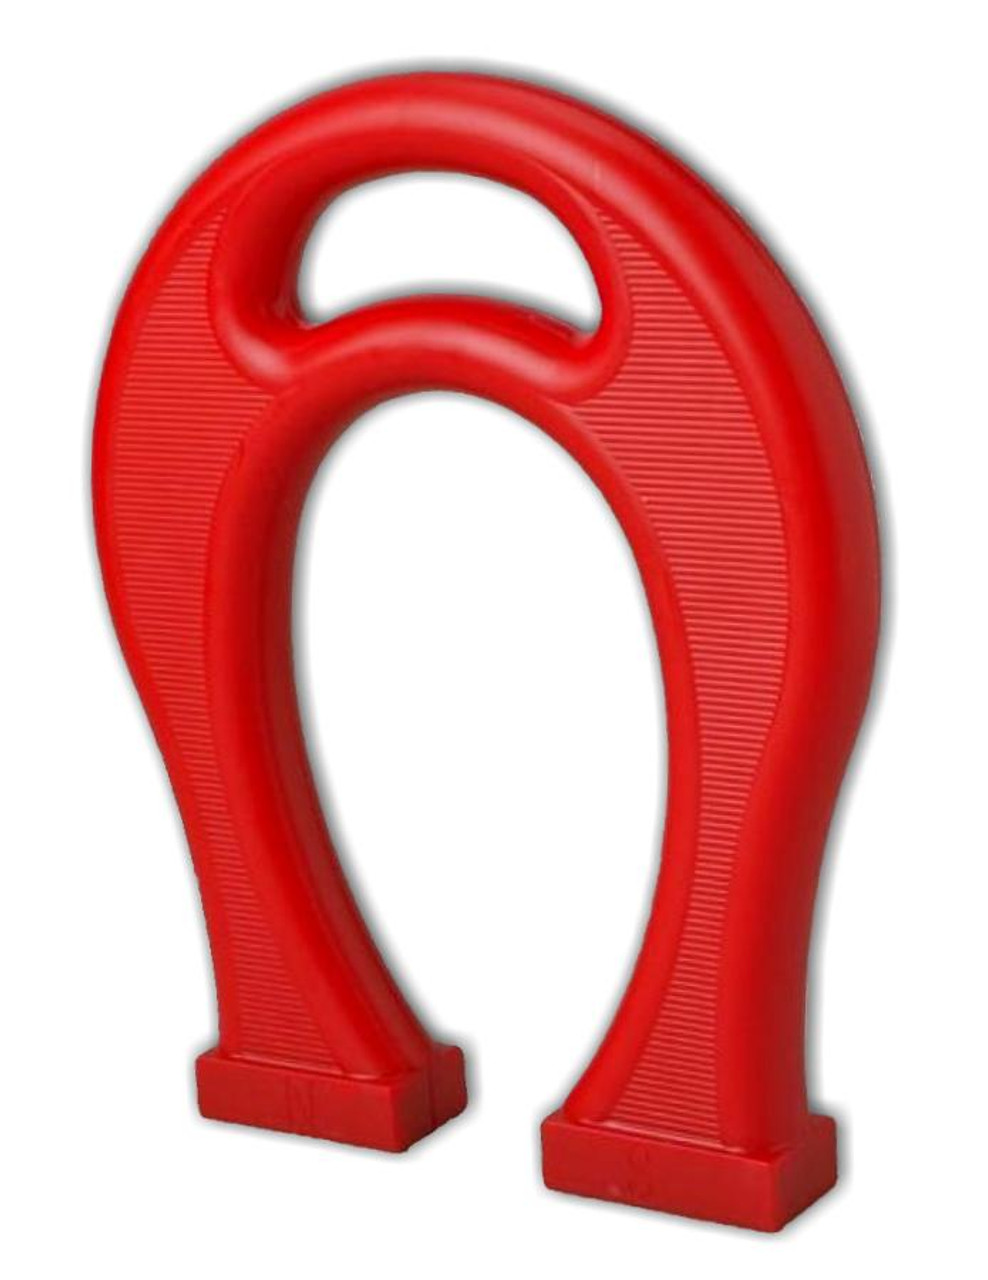 horseshoe magnets for kids